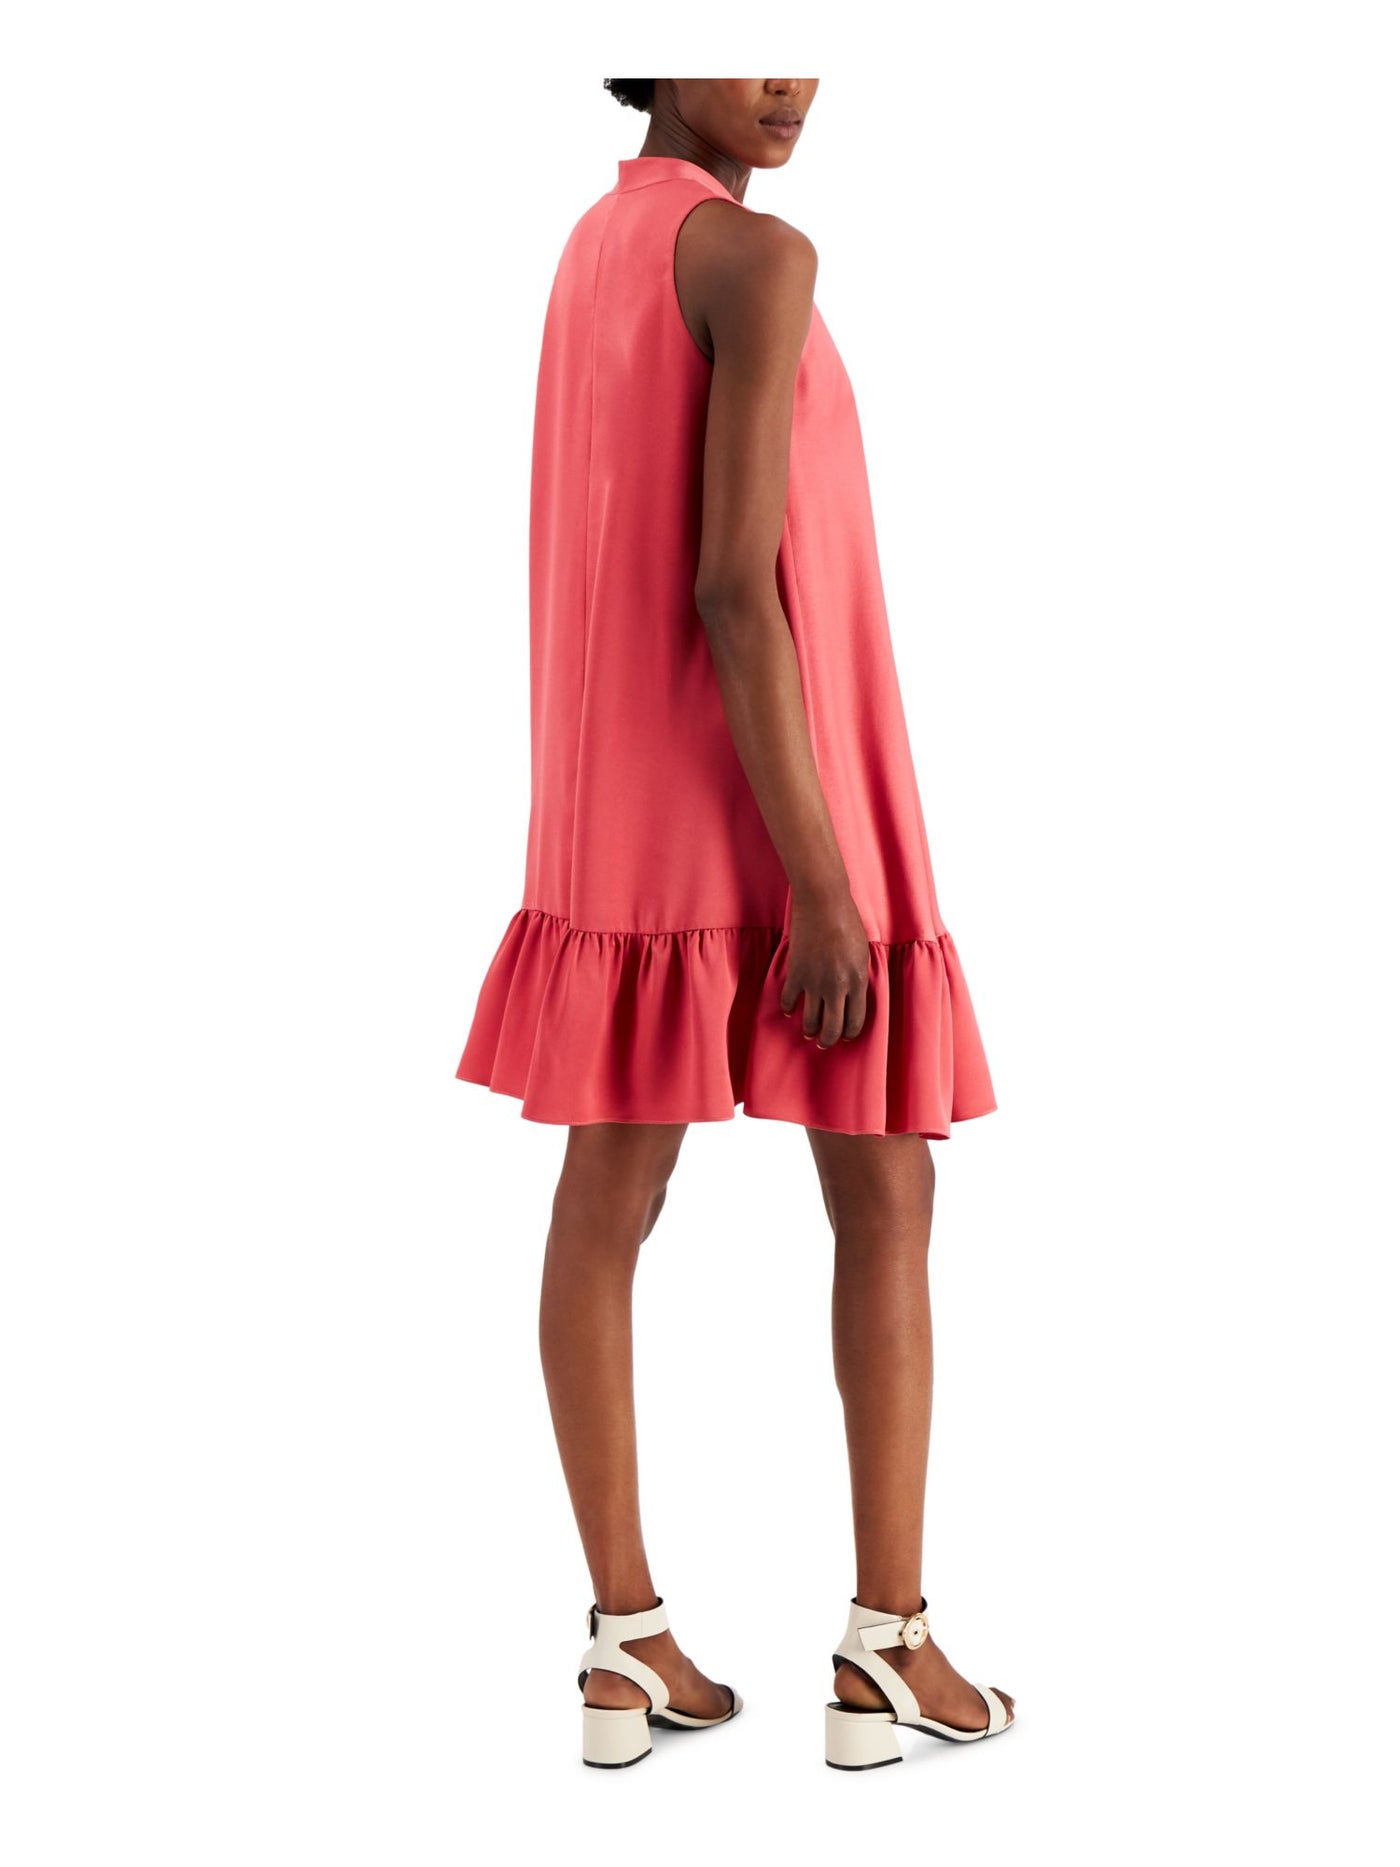 TAYLOR Womens Pink V Neck Short Party Trapeze Dress 2